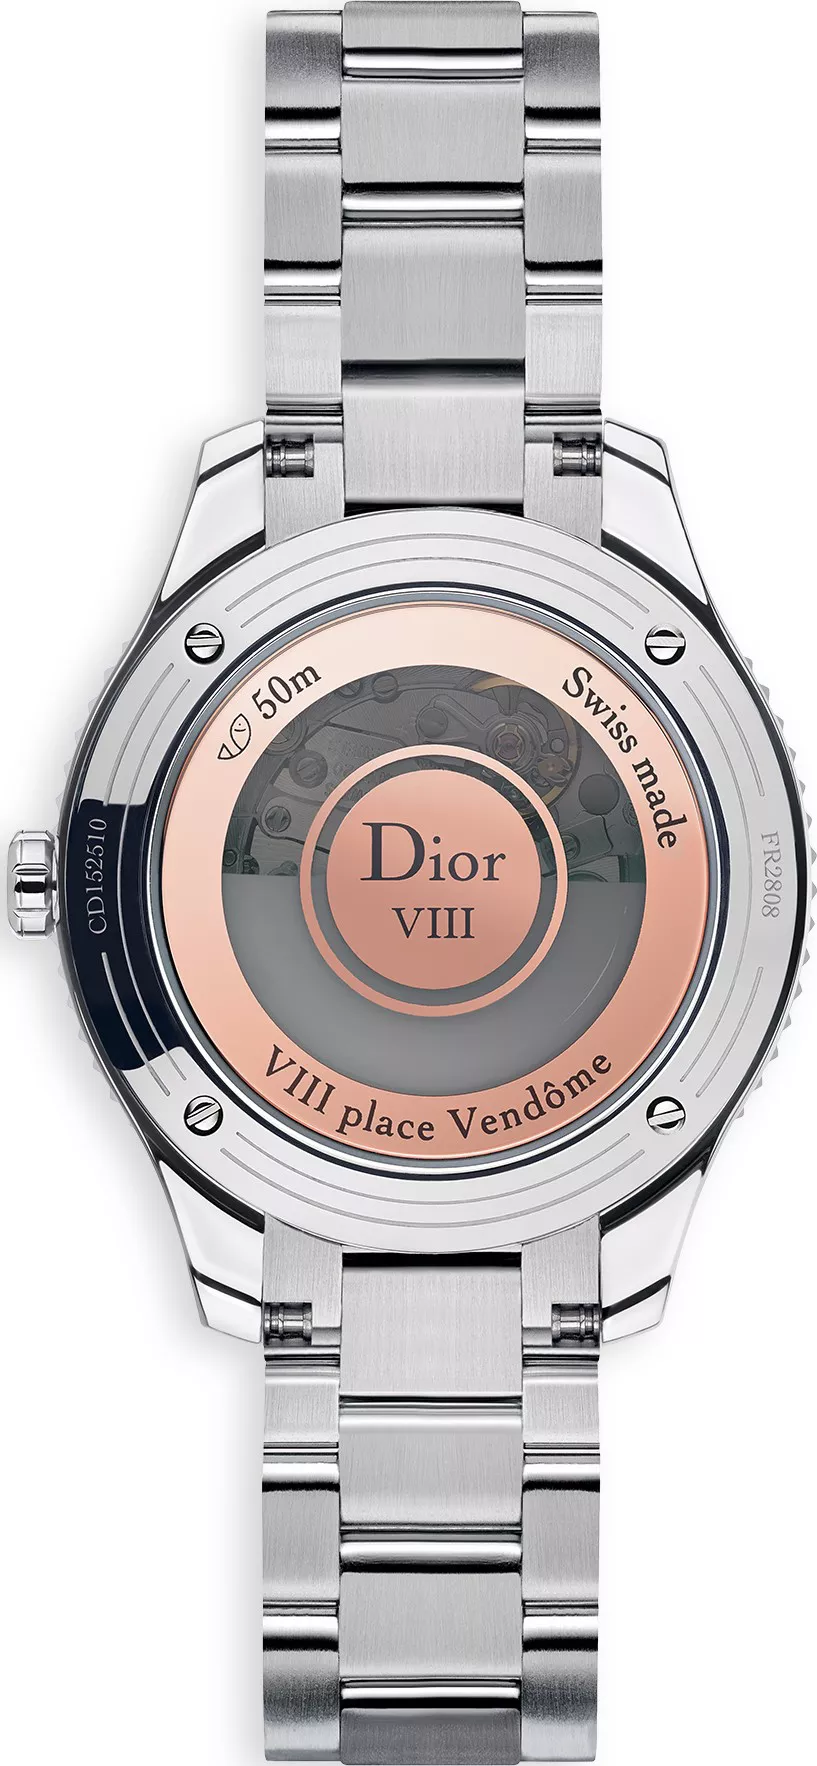 Christian Dior VIII Montaigne CD152510M001 Automatic Watch 32